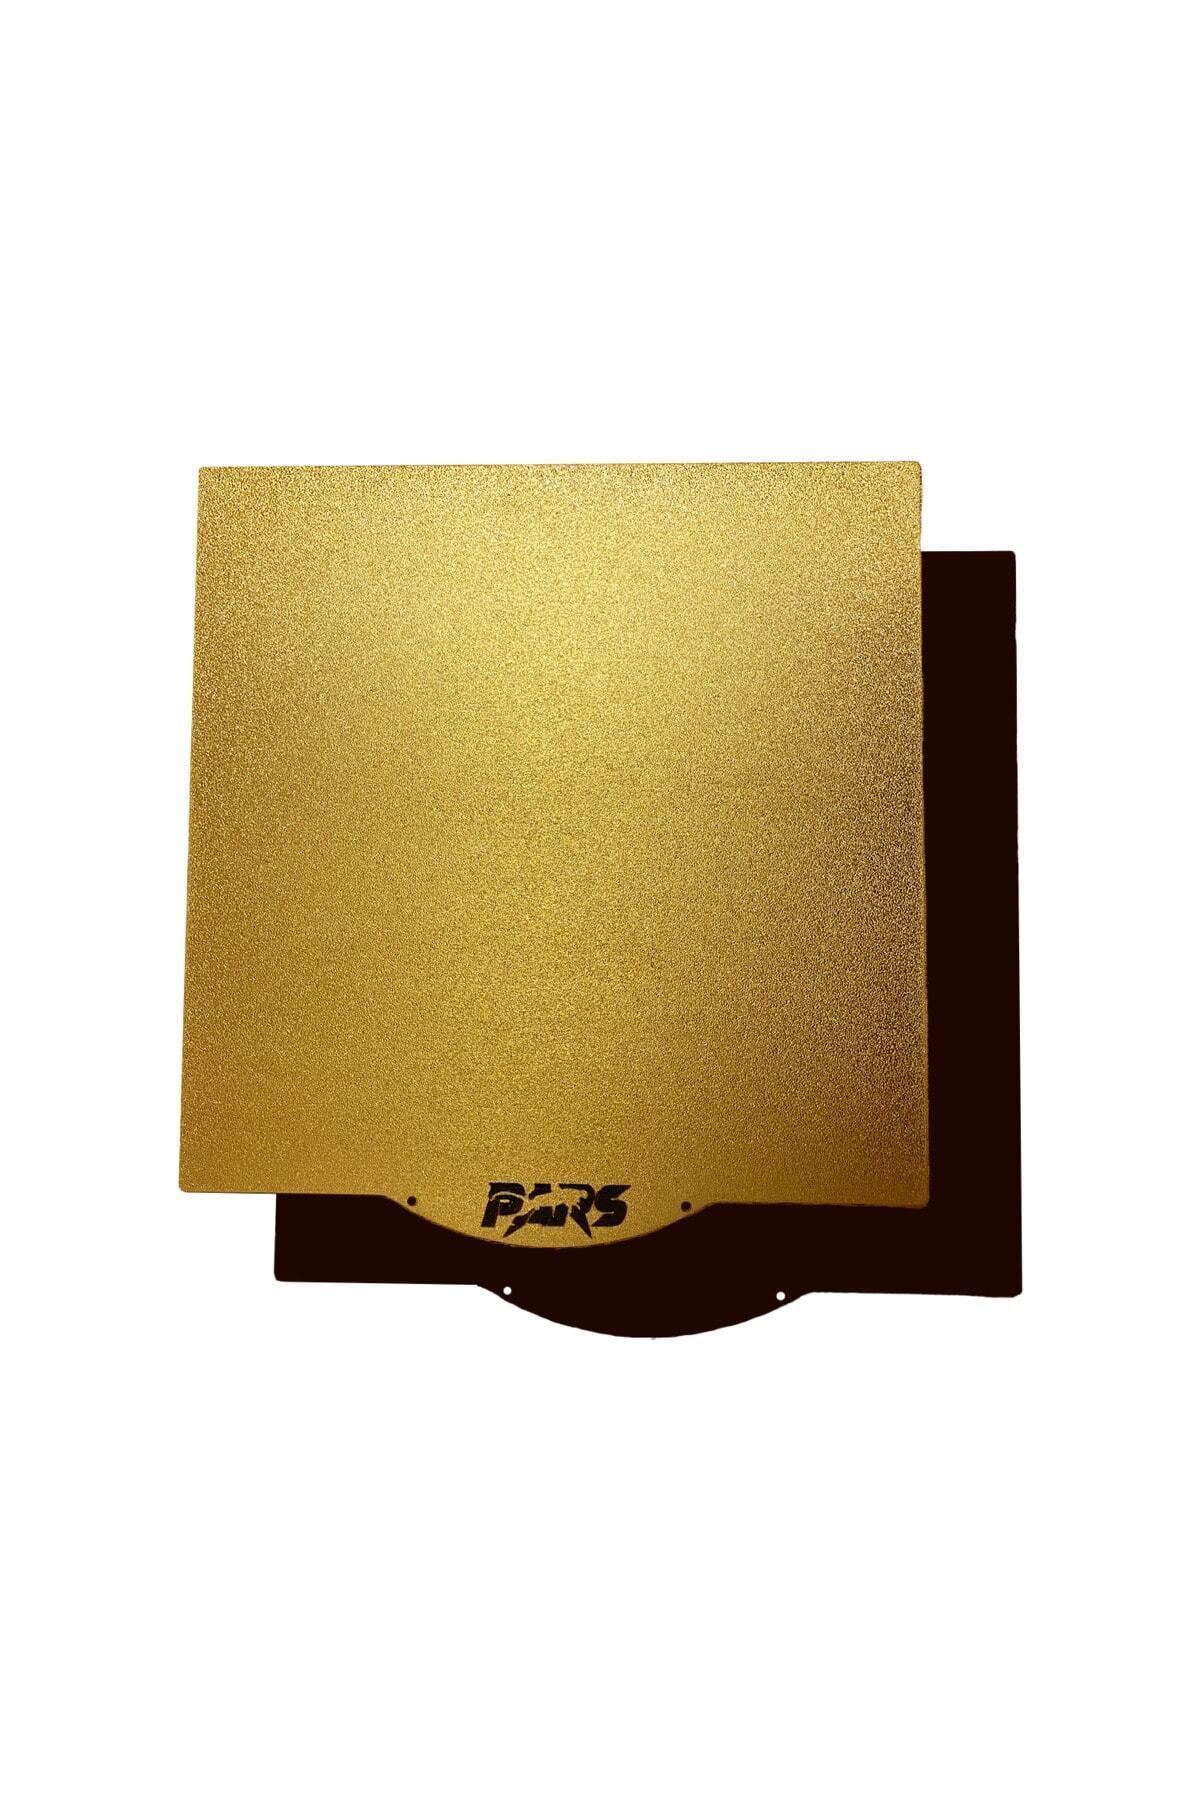 Pars 310x310 Mm Gold Pei Kaplı Özel Yay Çeliği Tabla Magnetli